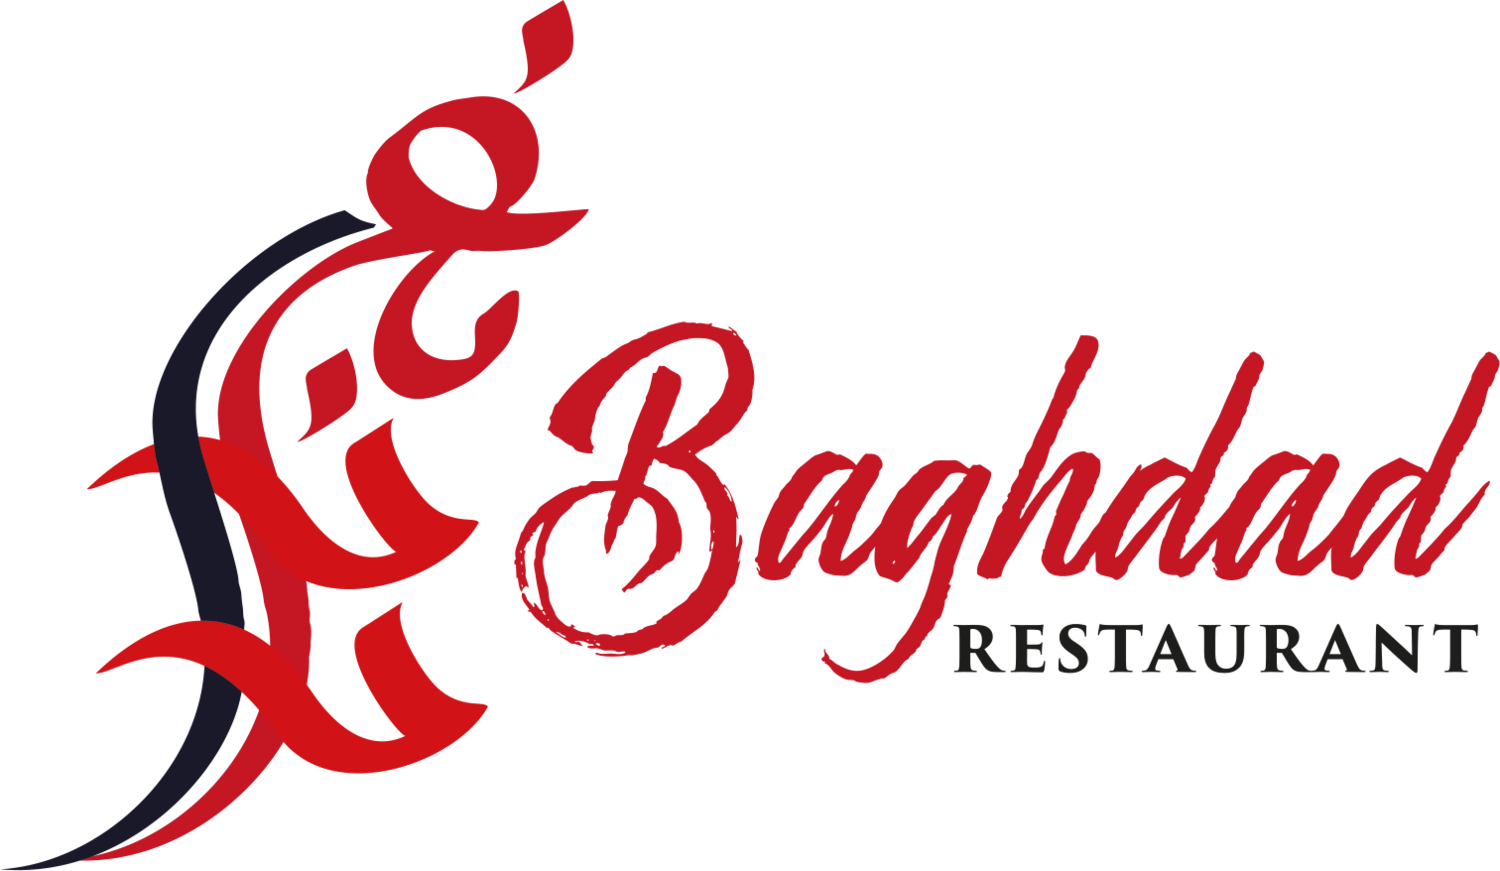 Baghdad Restaurant